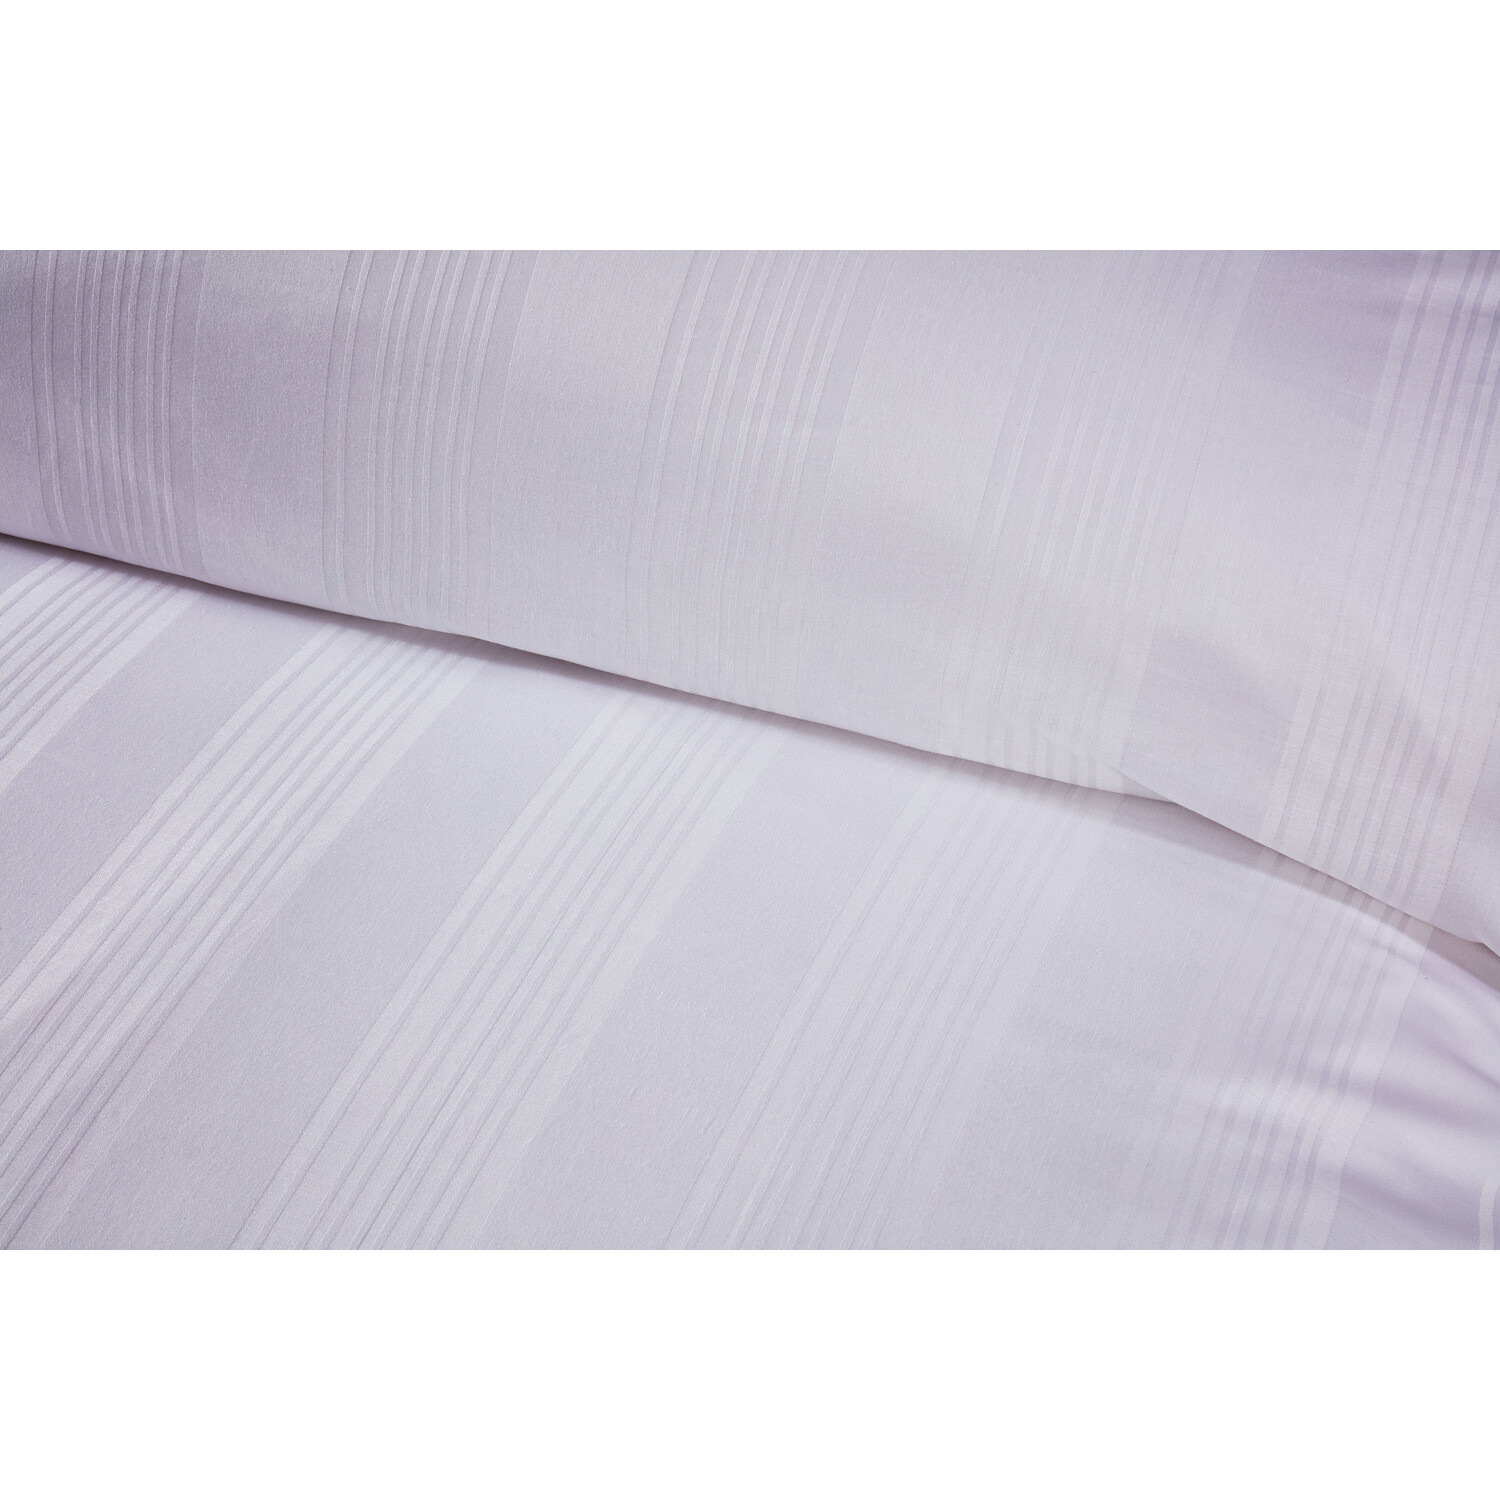 Islington Stripe Sateen Duvet Cover and Pillowcase Set - White / Superking Image 4